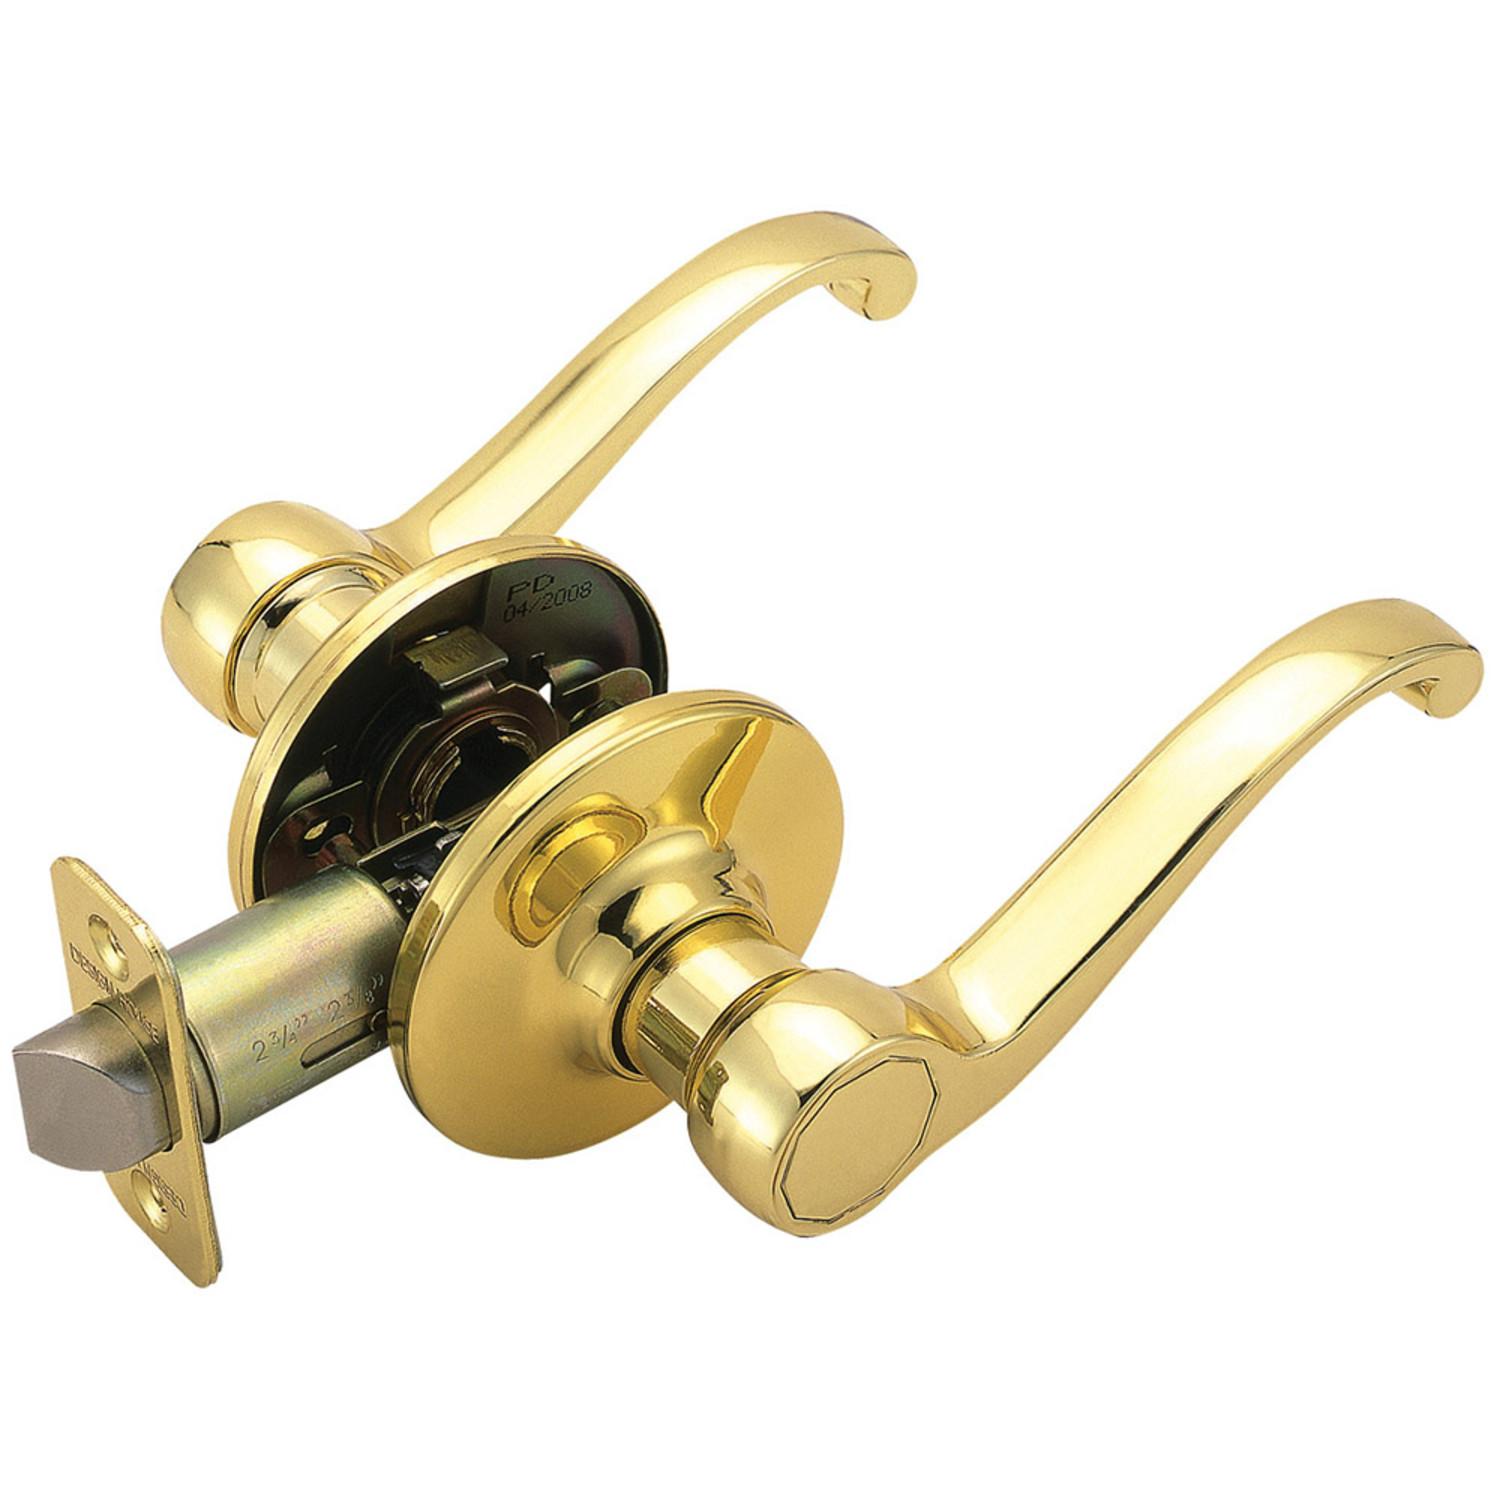 Scroll Brass Closet Door Lever ǀ Hardware & Locks ǀ Today's Design